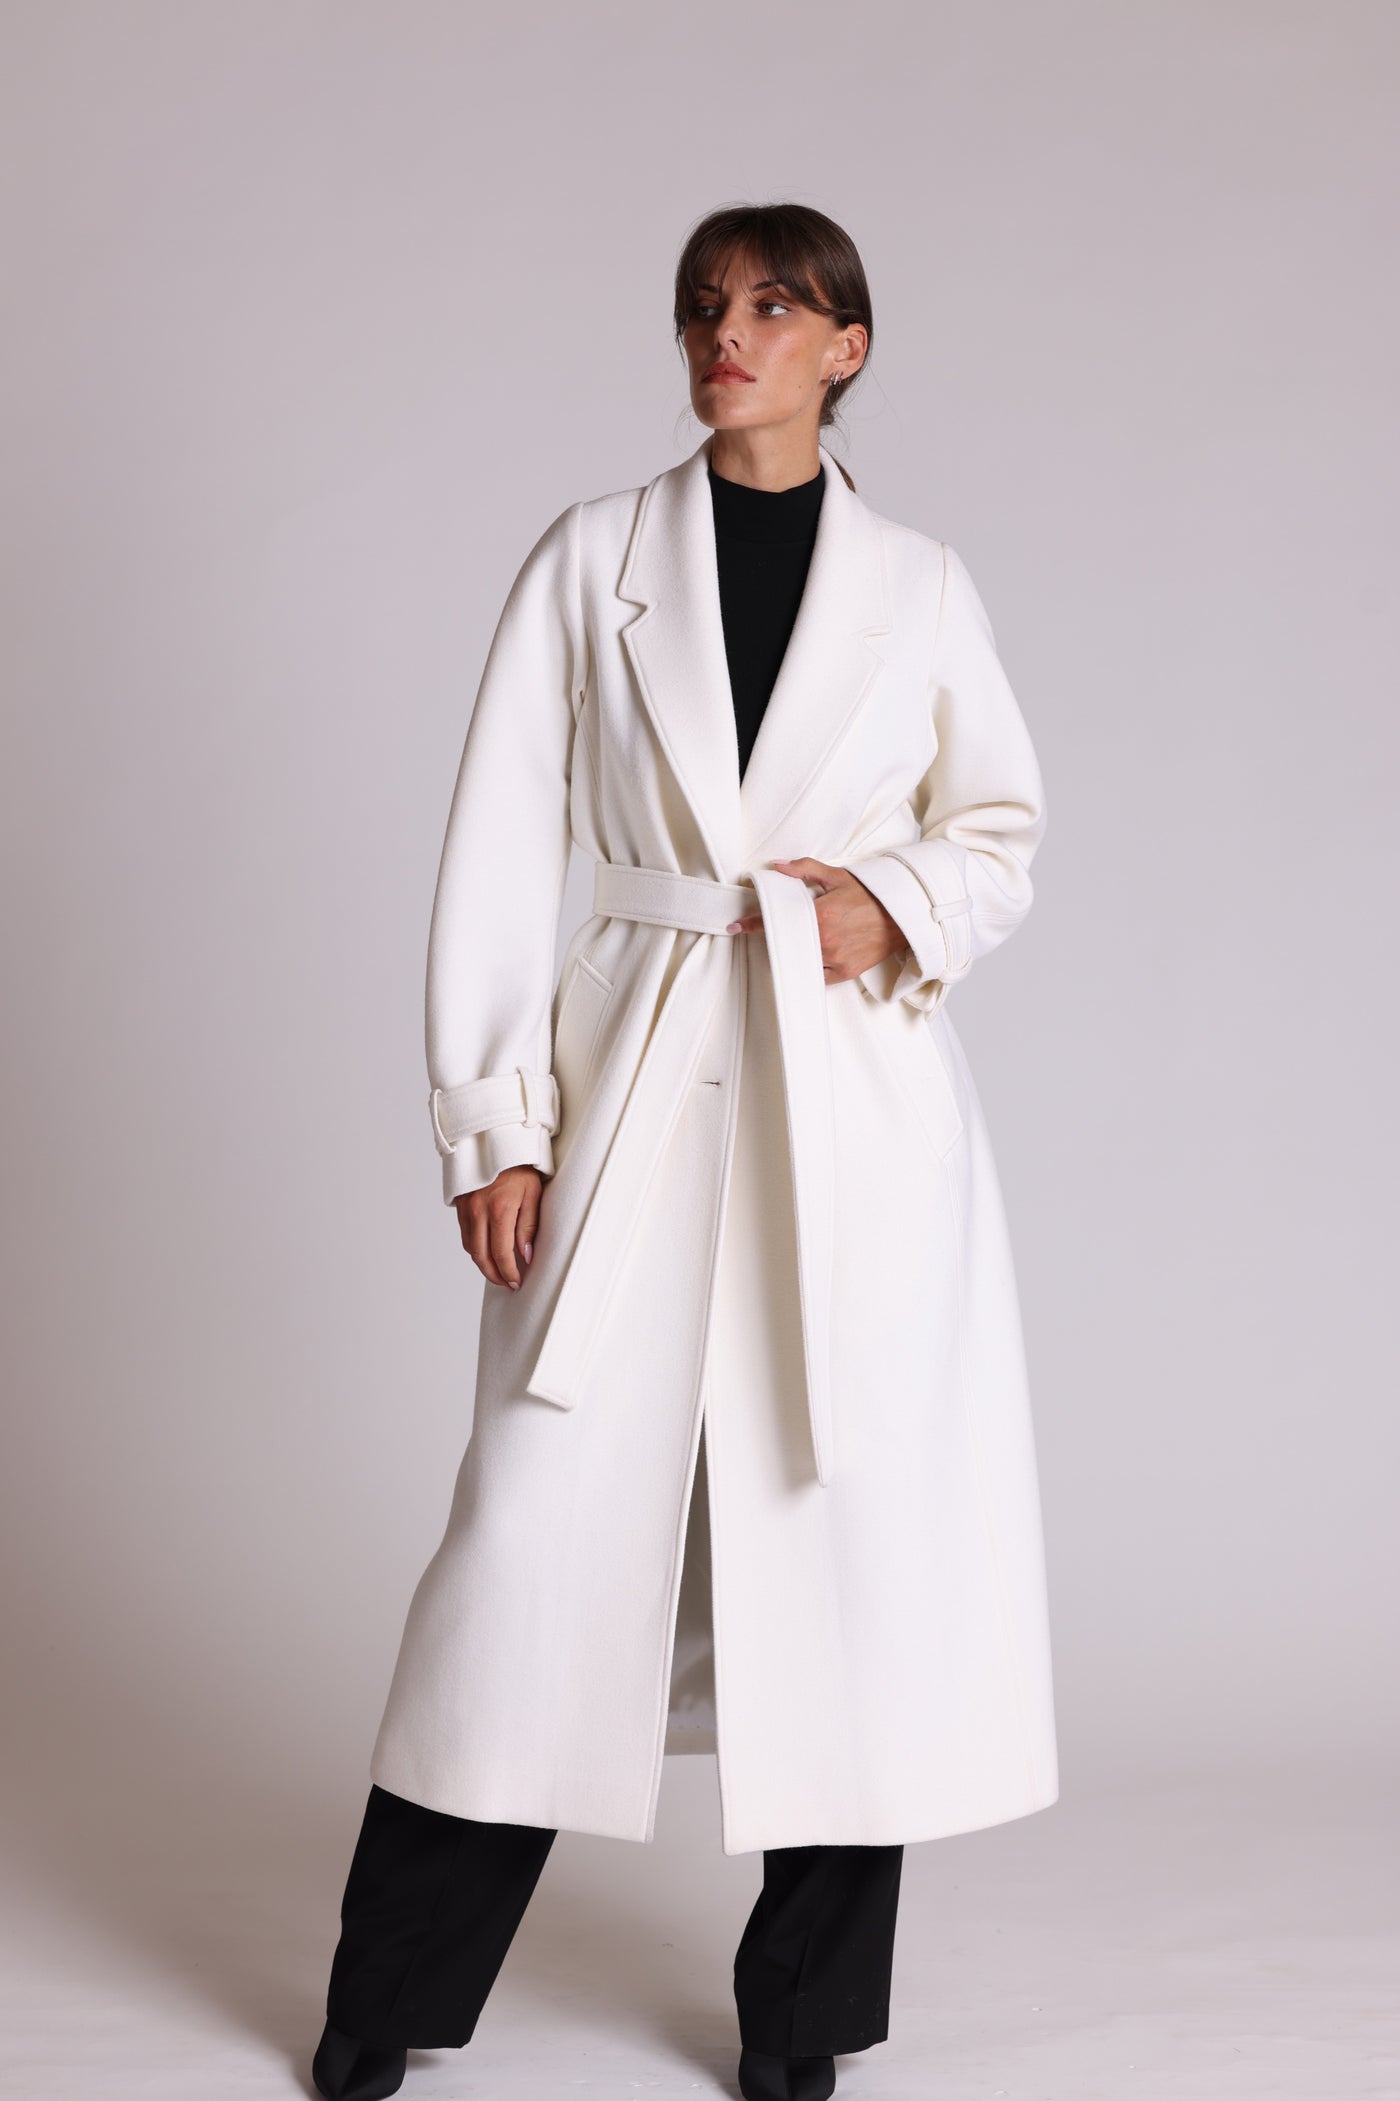 Gaia Long Coat in Wool